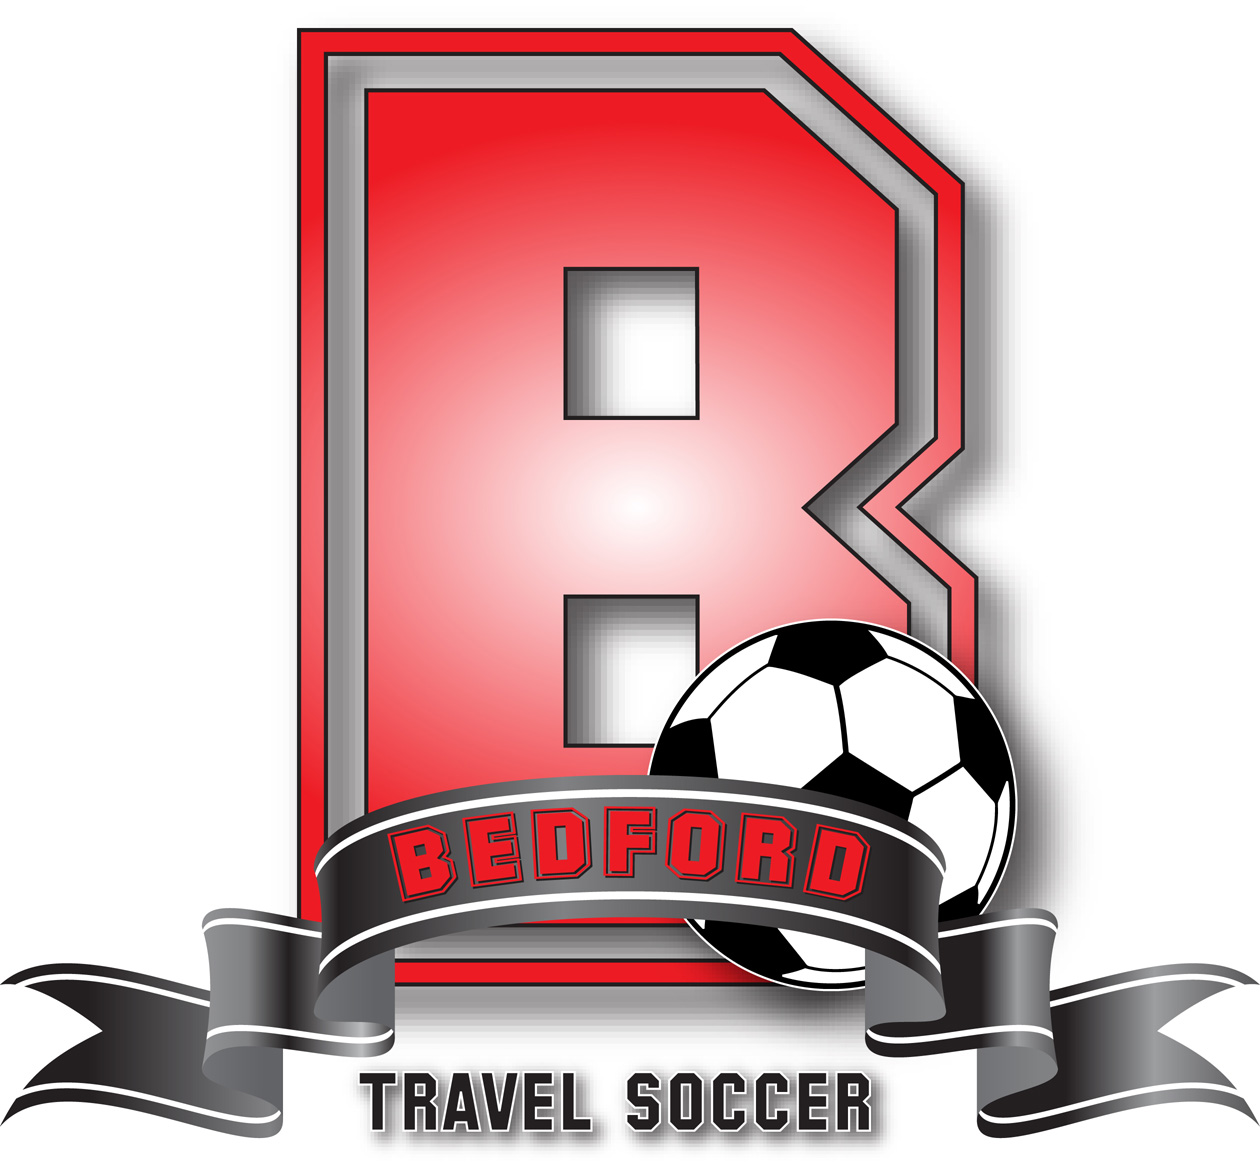 Bedford Travel Soccer team badge